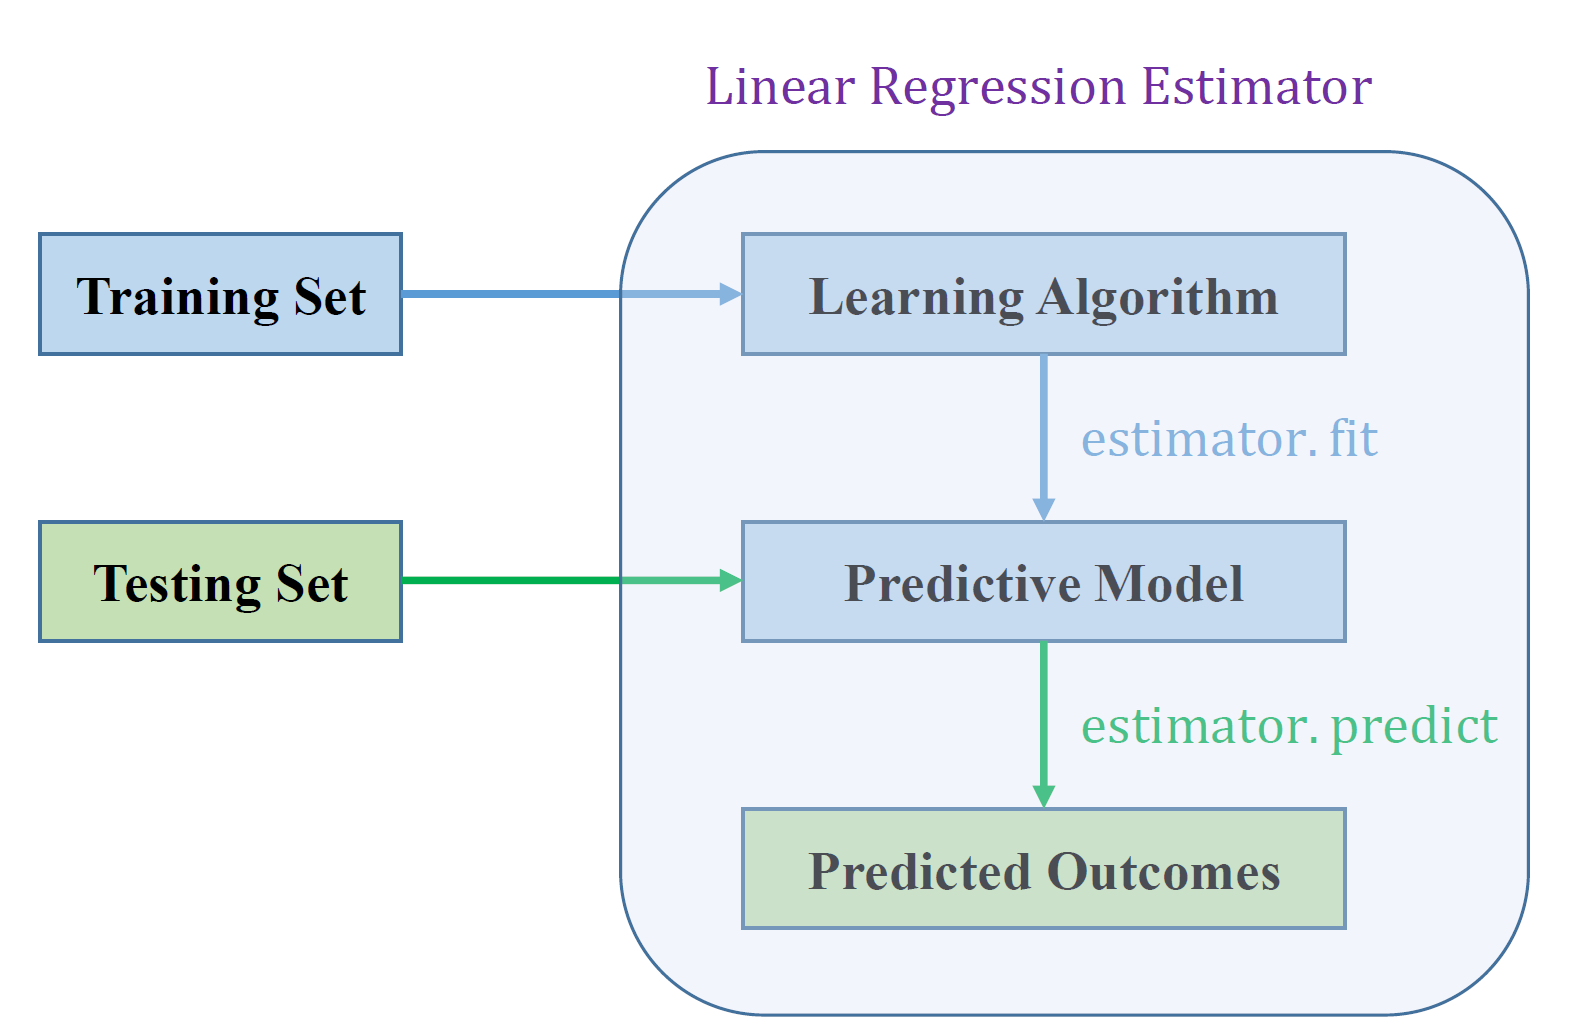 ml algorithms for regression